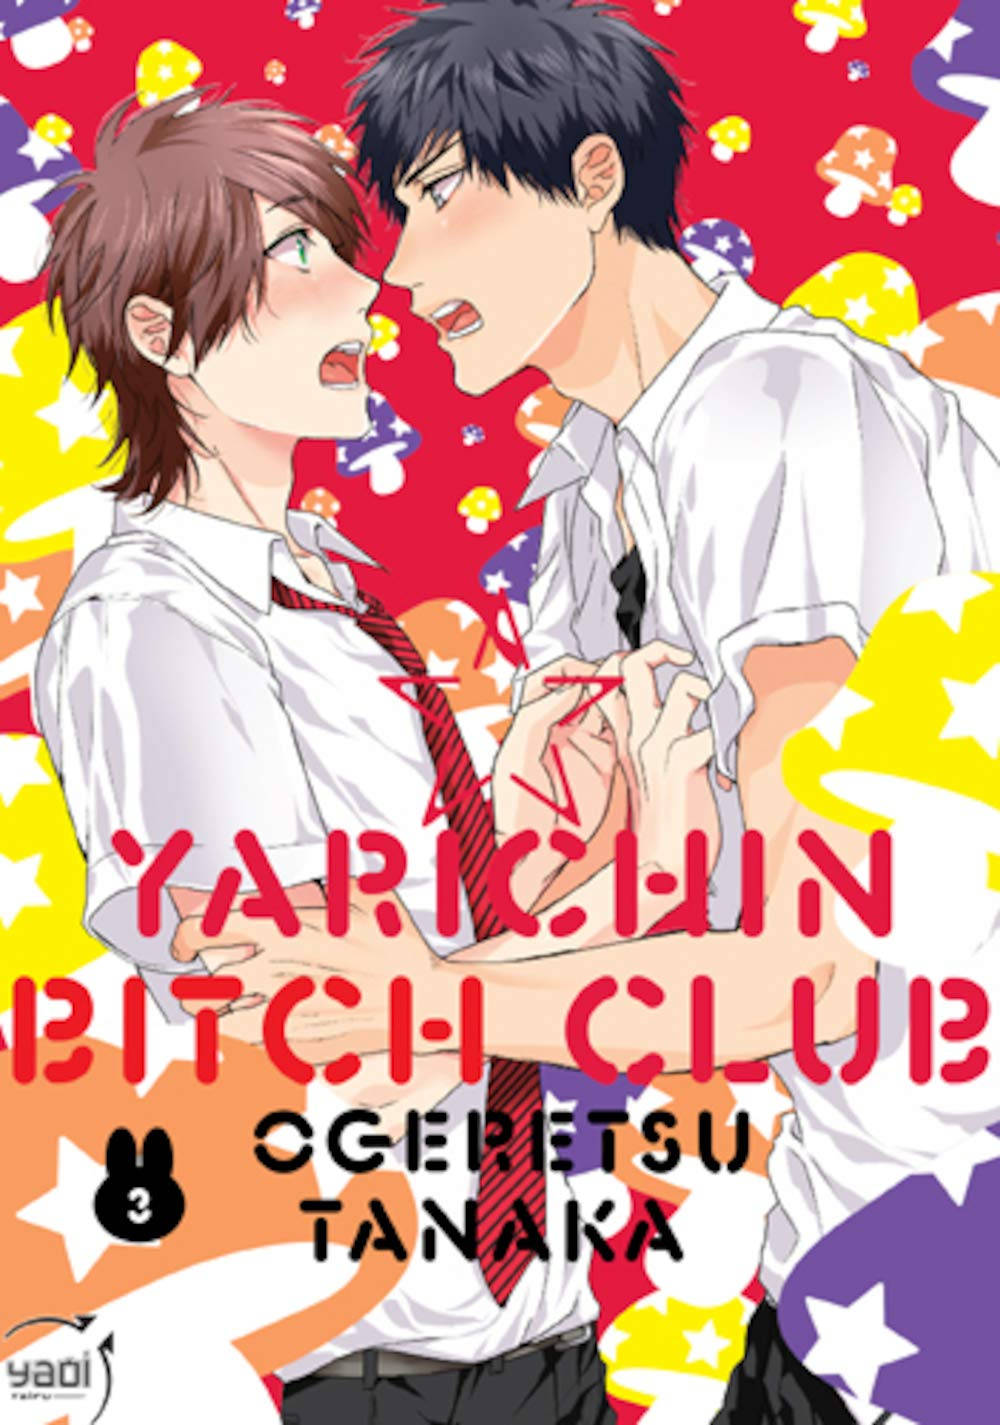 Yarichin Bitch Club Face Off Background